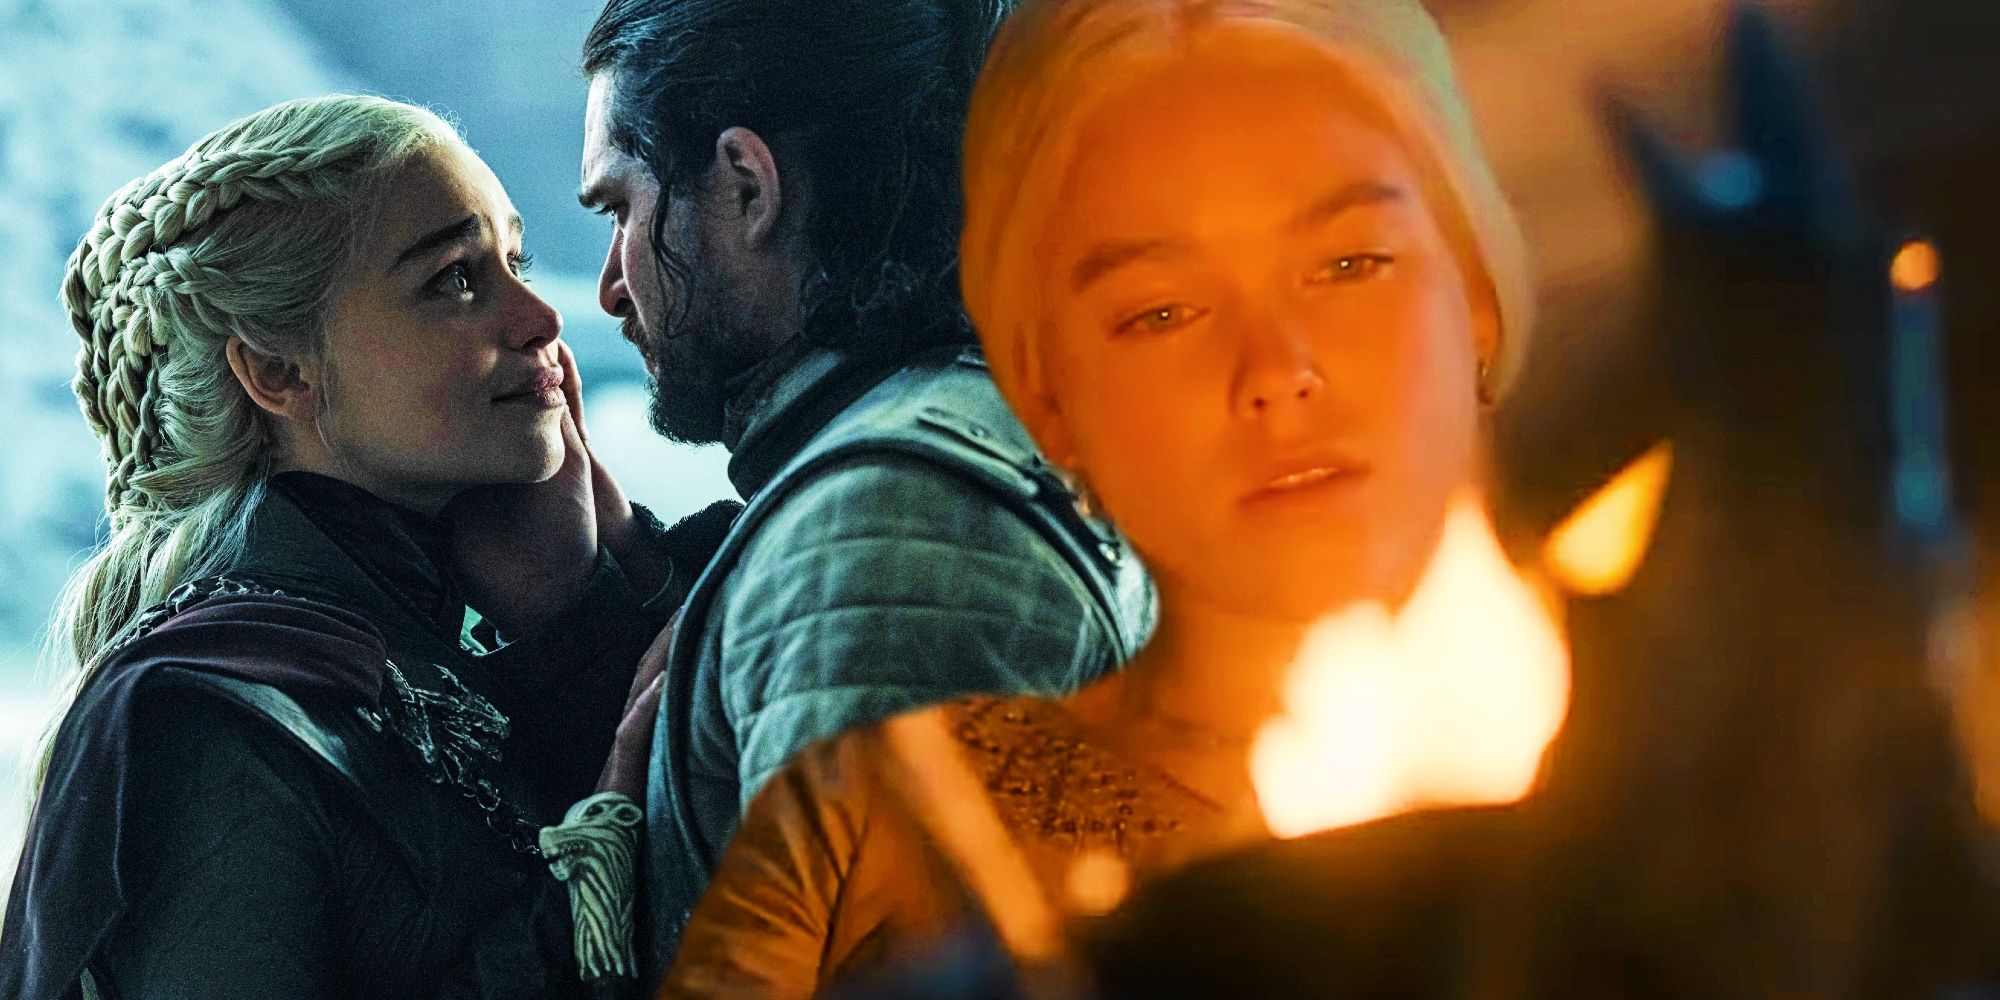 Jon and Daenerys in GOT and Rhaenyra in HOTD episode 4